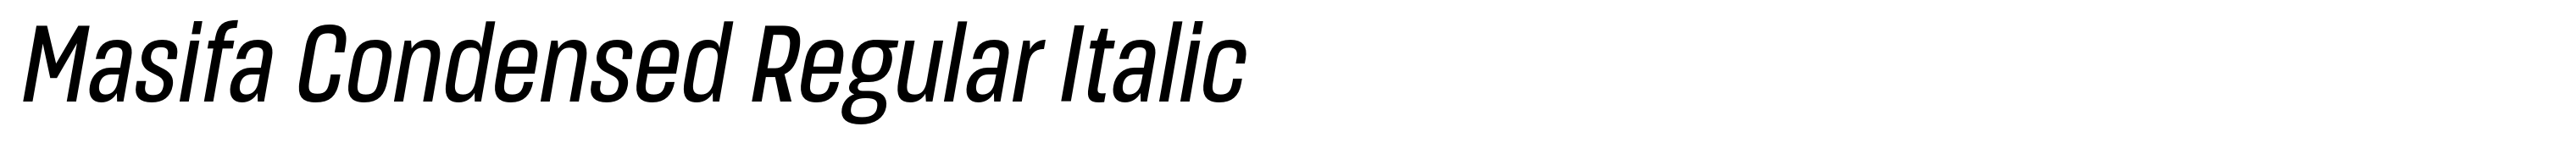 Masifa Condensed Regular Italic